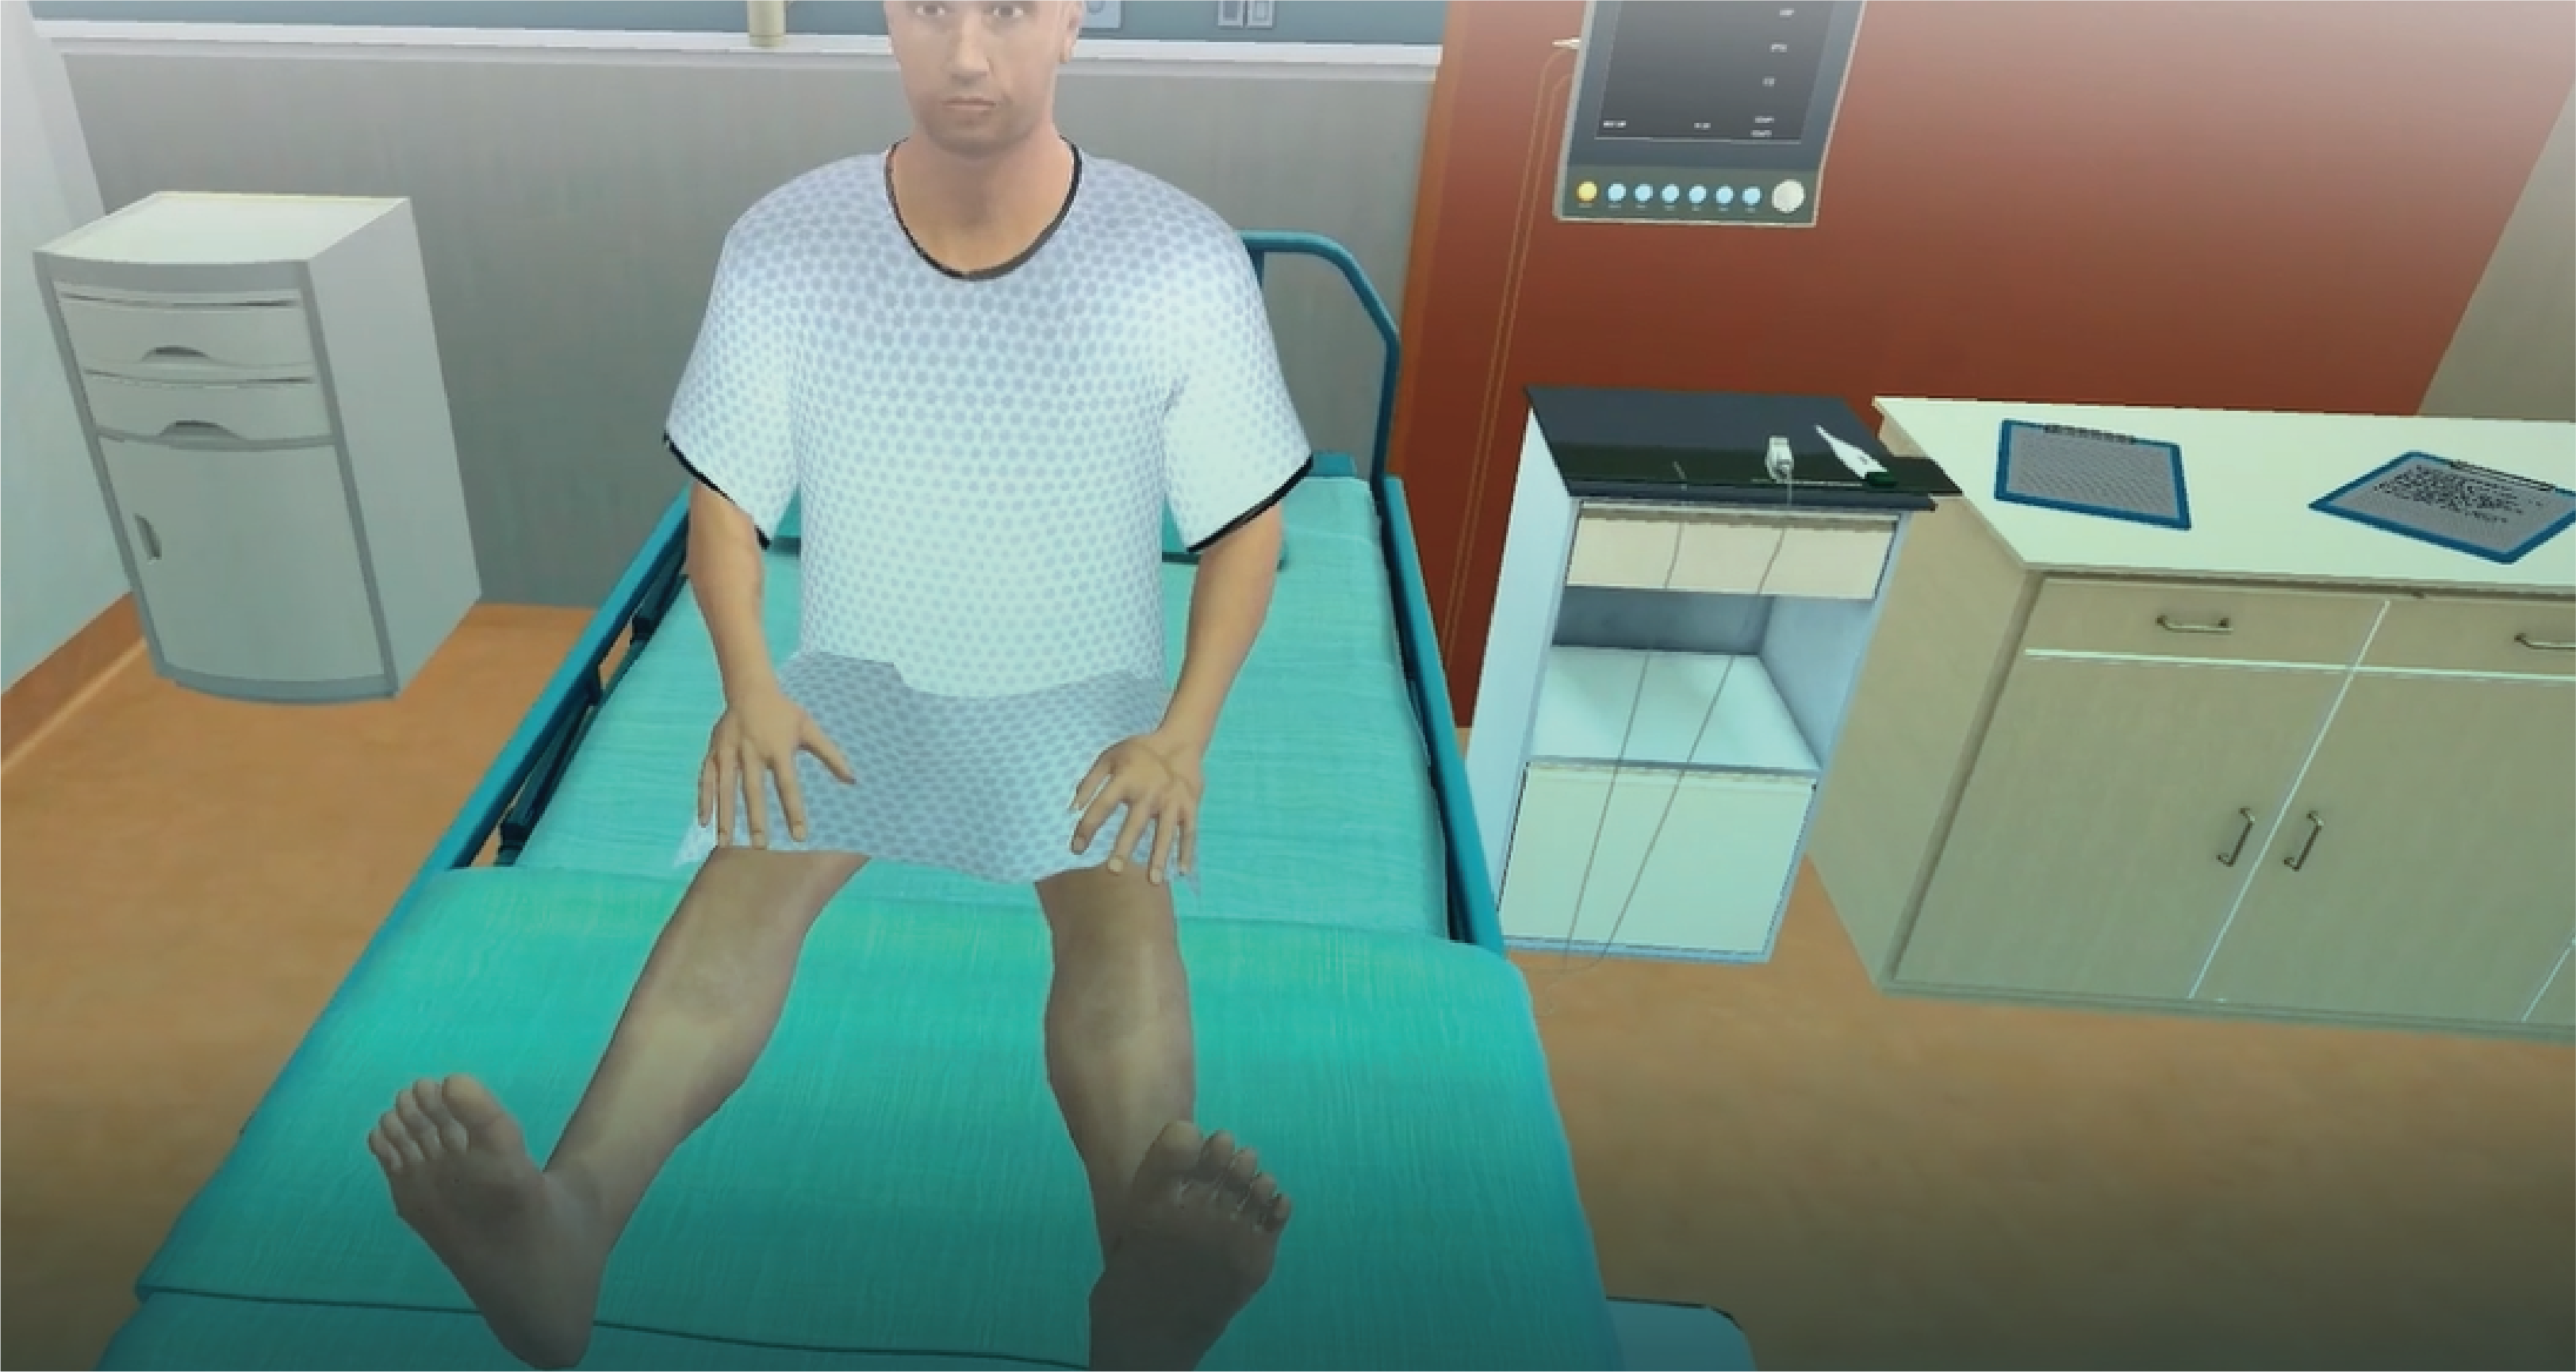   	
virtual reality healthcare training